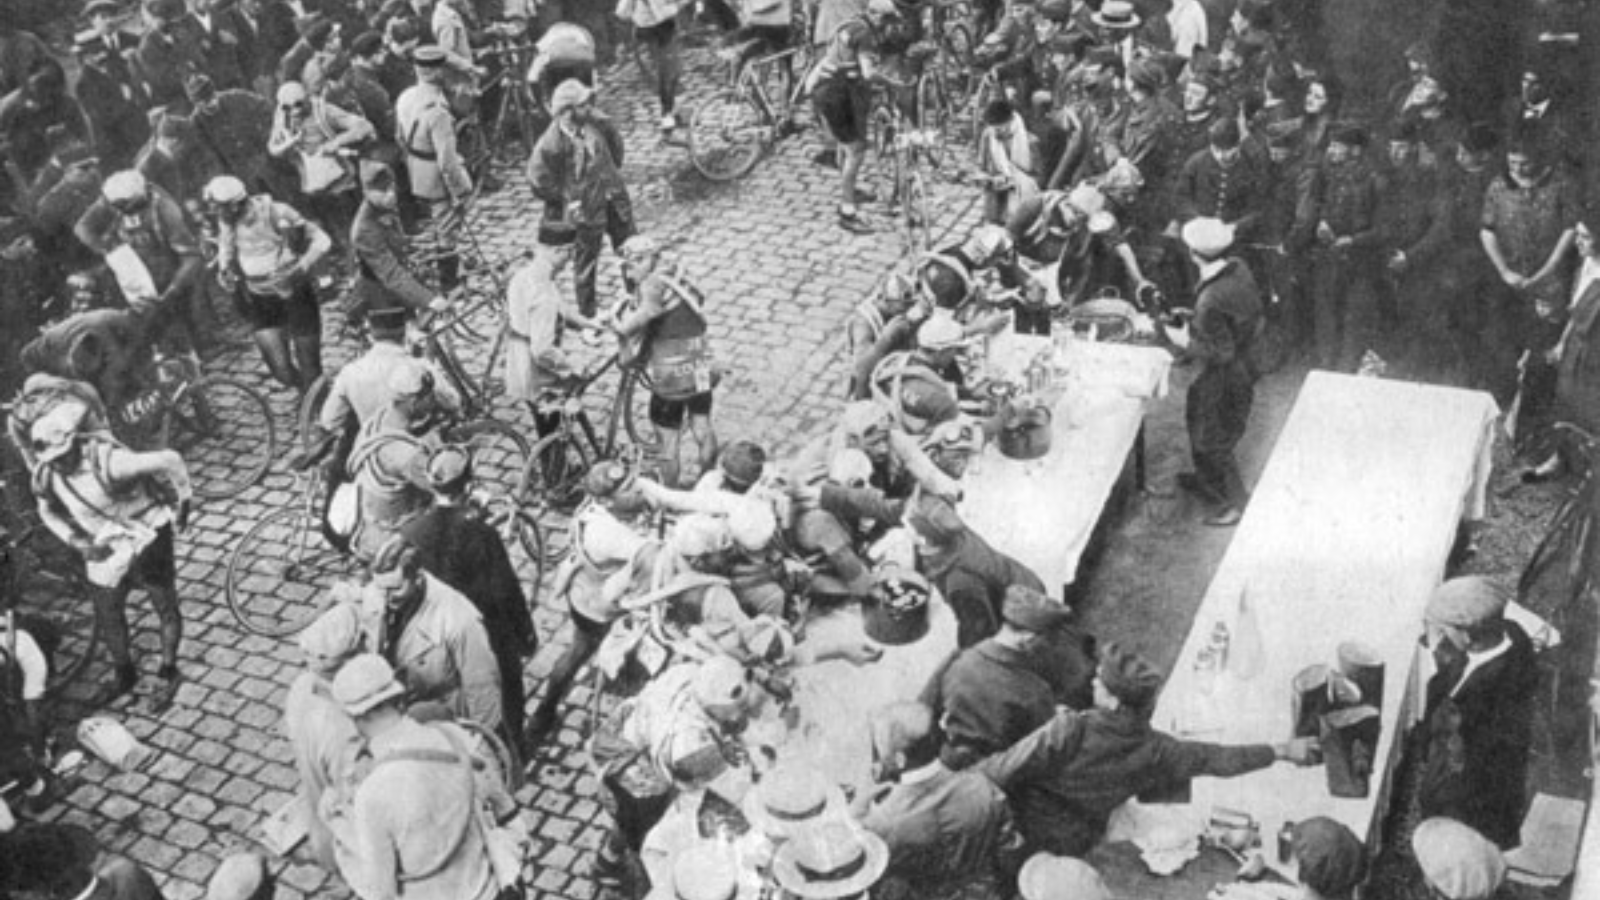 Feedzone at Tour de France 1925